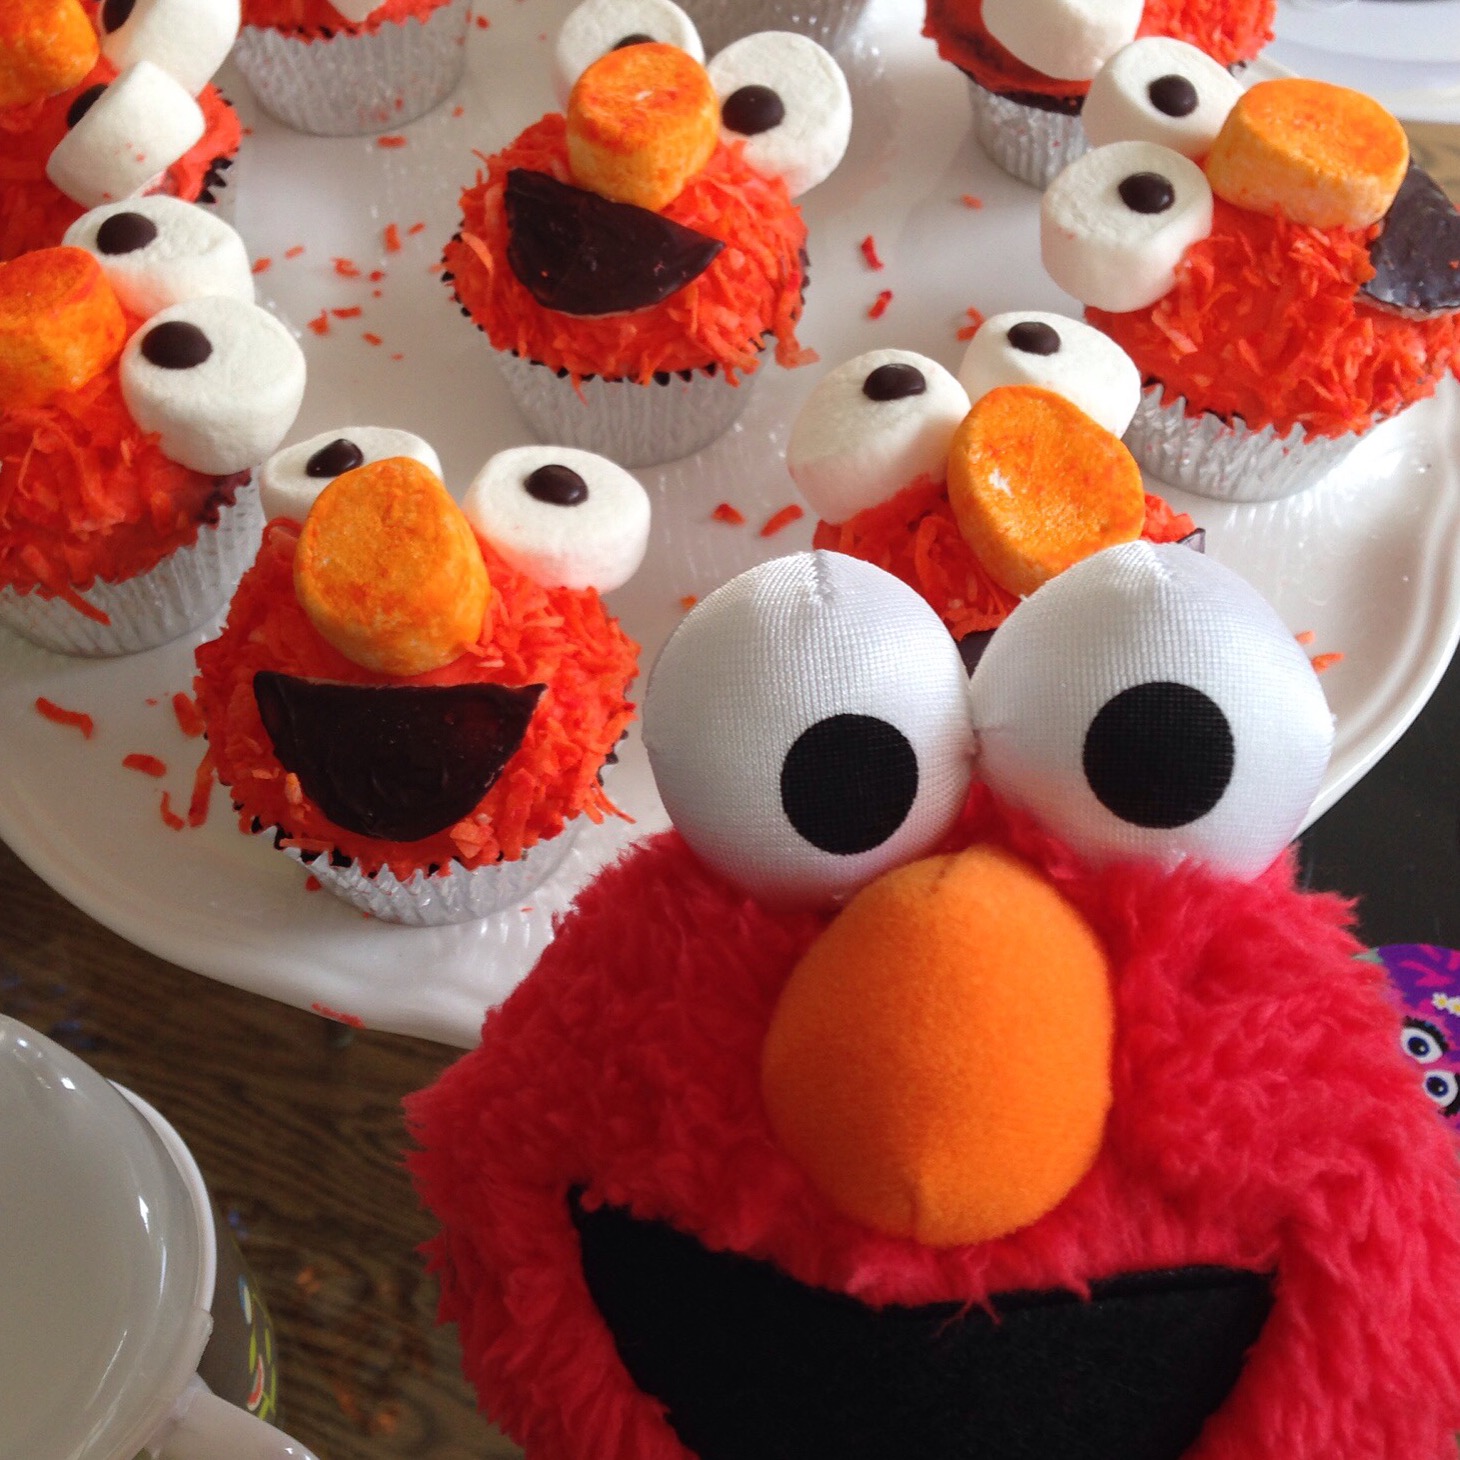 Make Elmo Cupcakes for a Birthday Party - Call Me Grandma